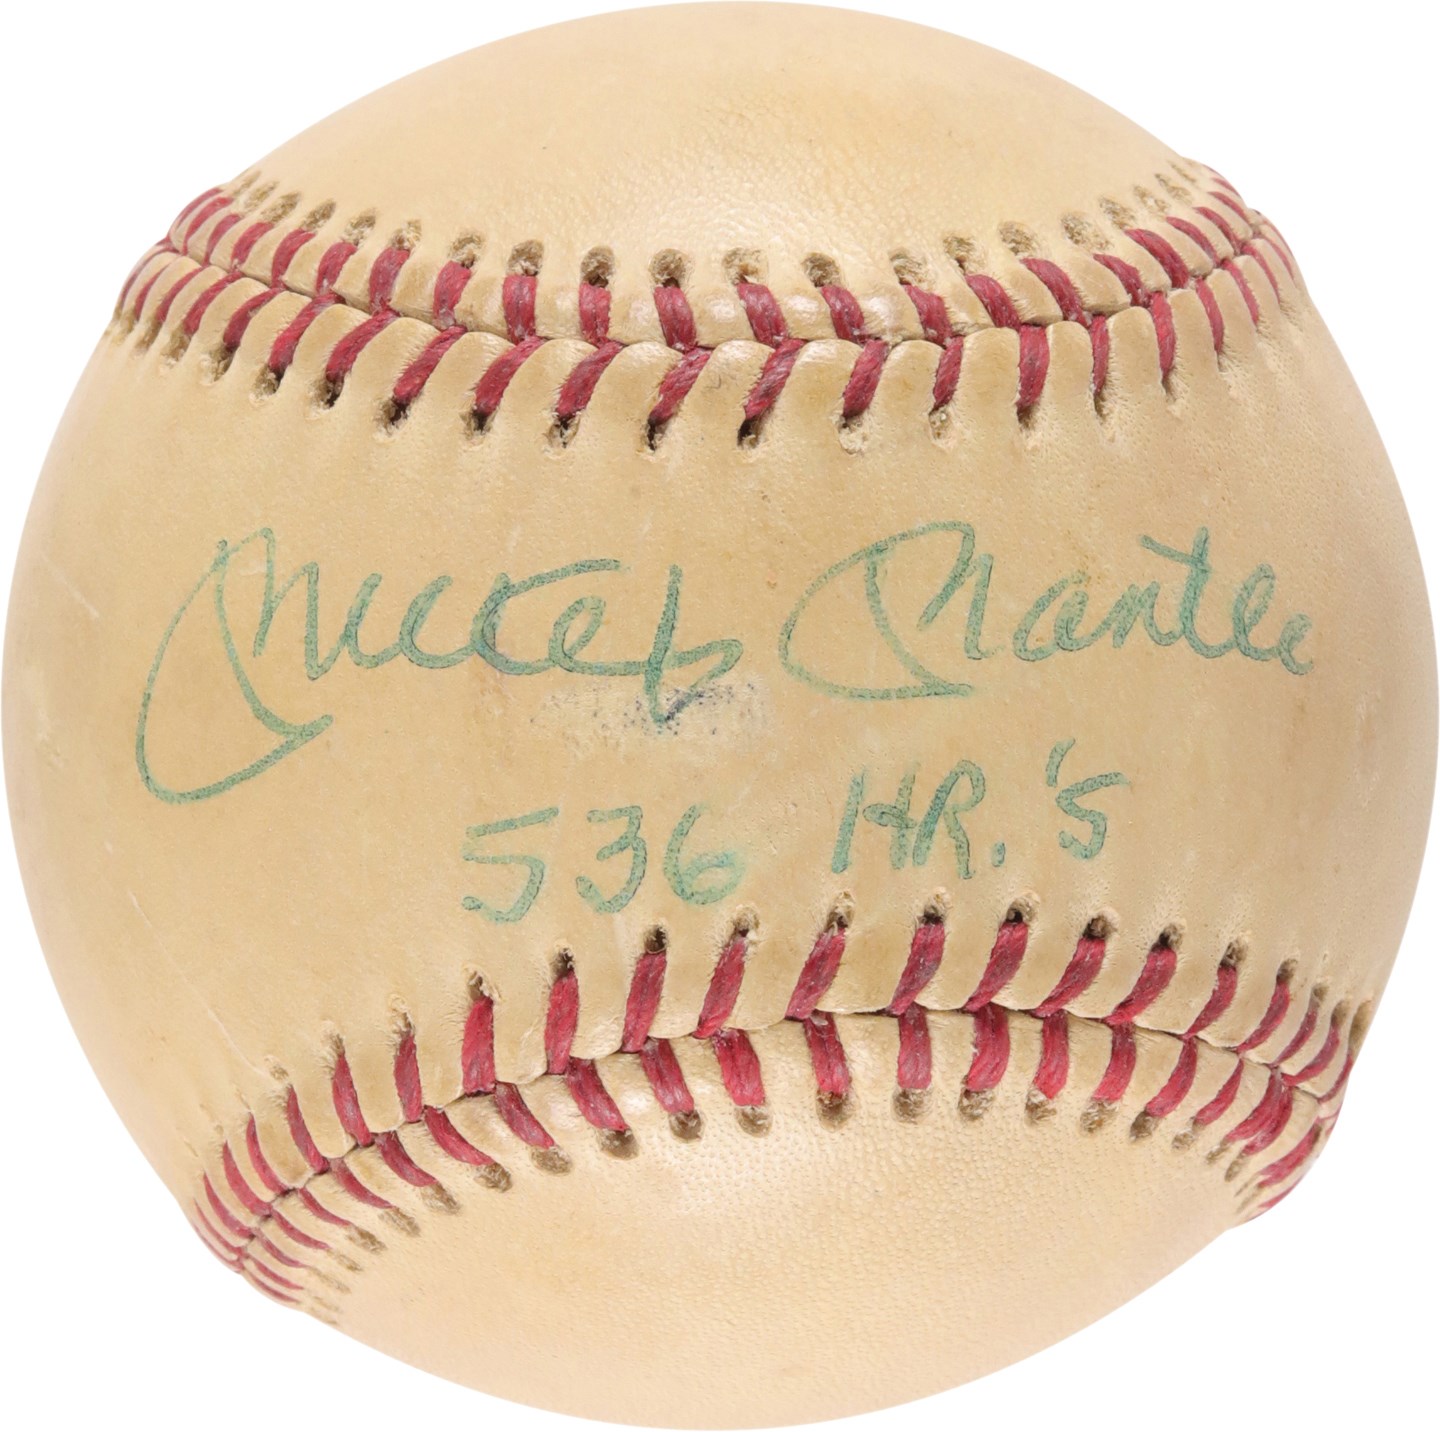 Baseball Autographs - Mickey Mantle "536 HR's" Single-Signed Baseball (JSA)